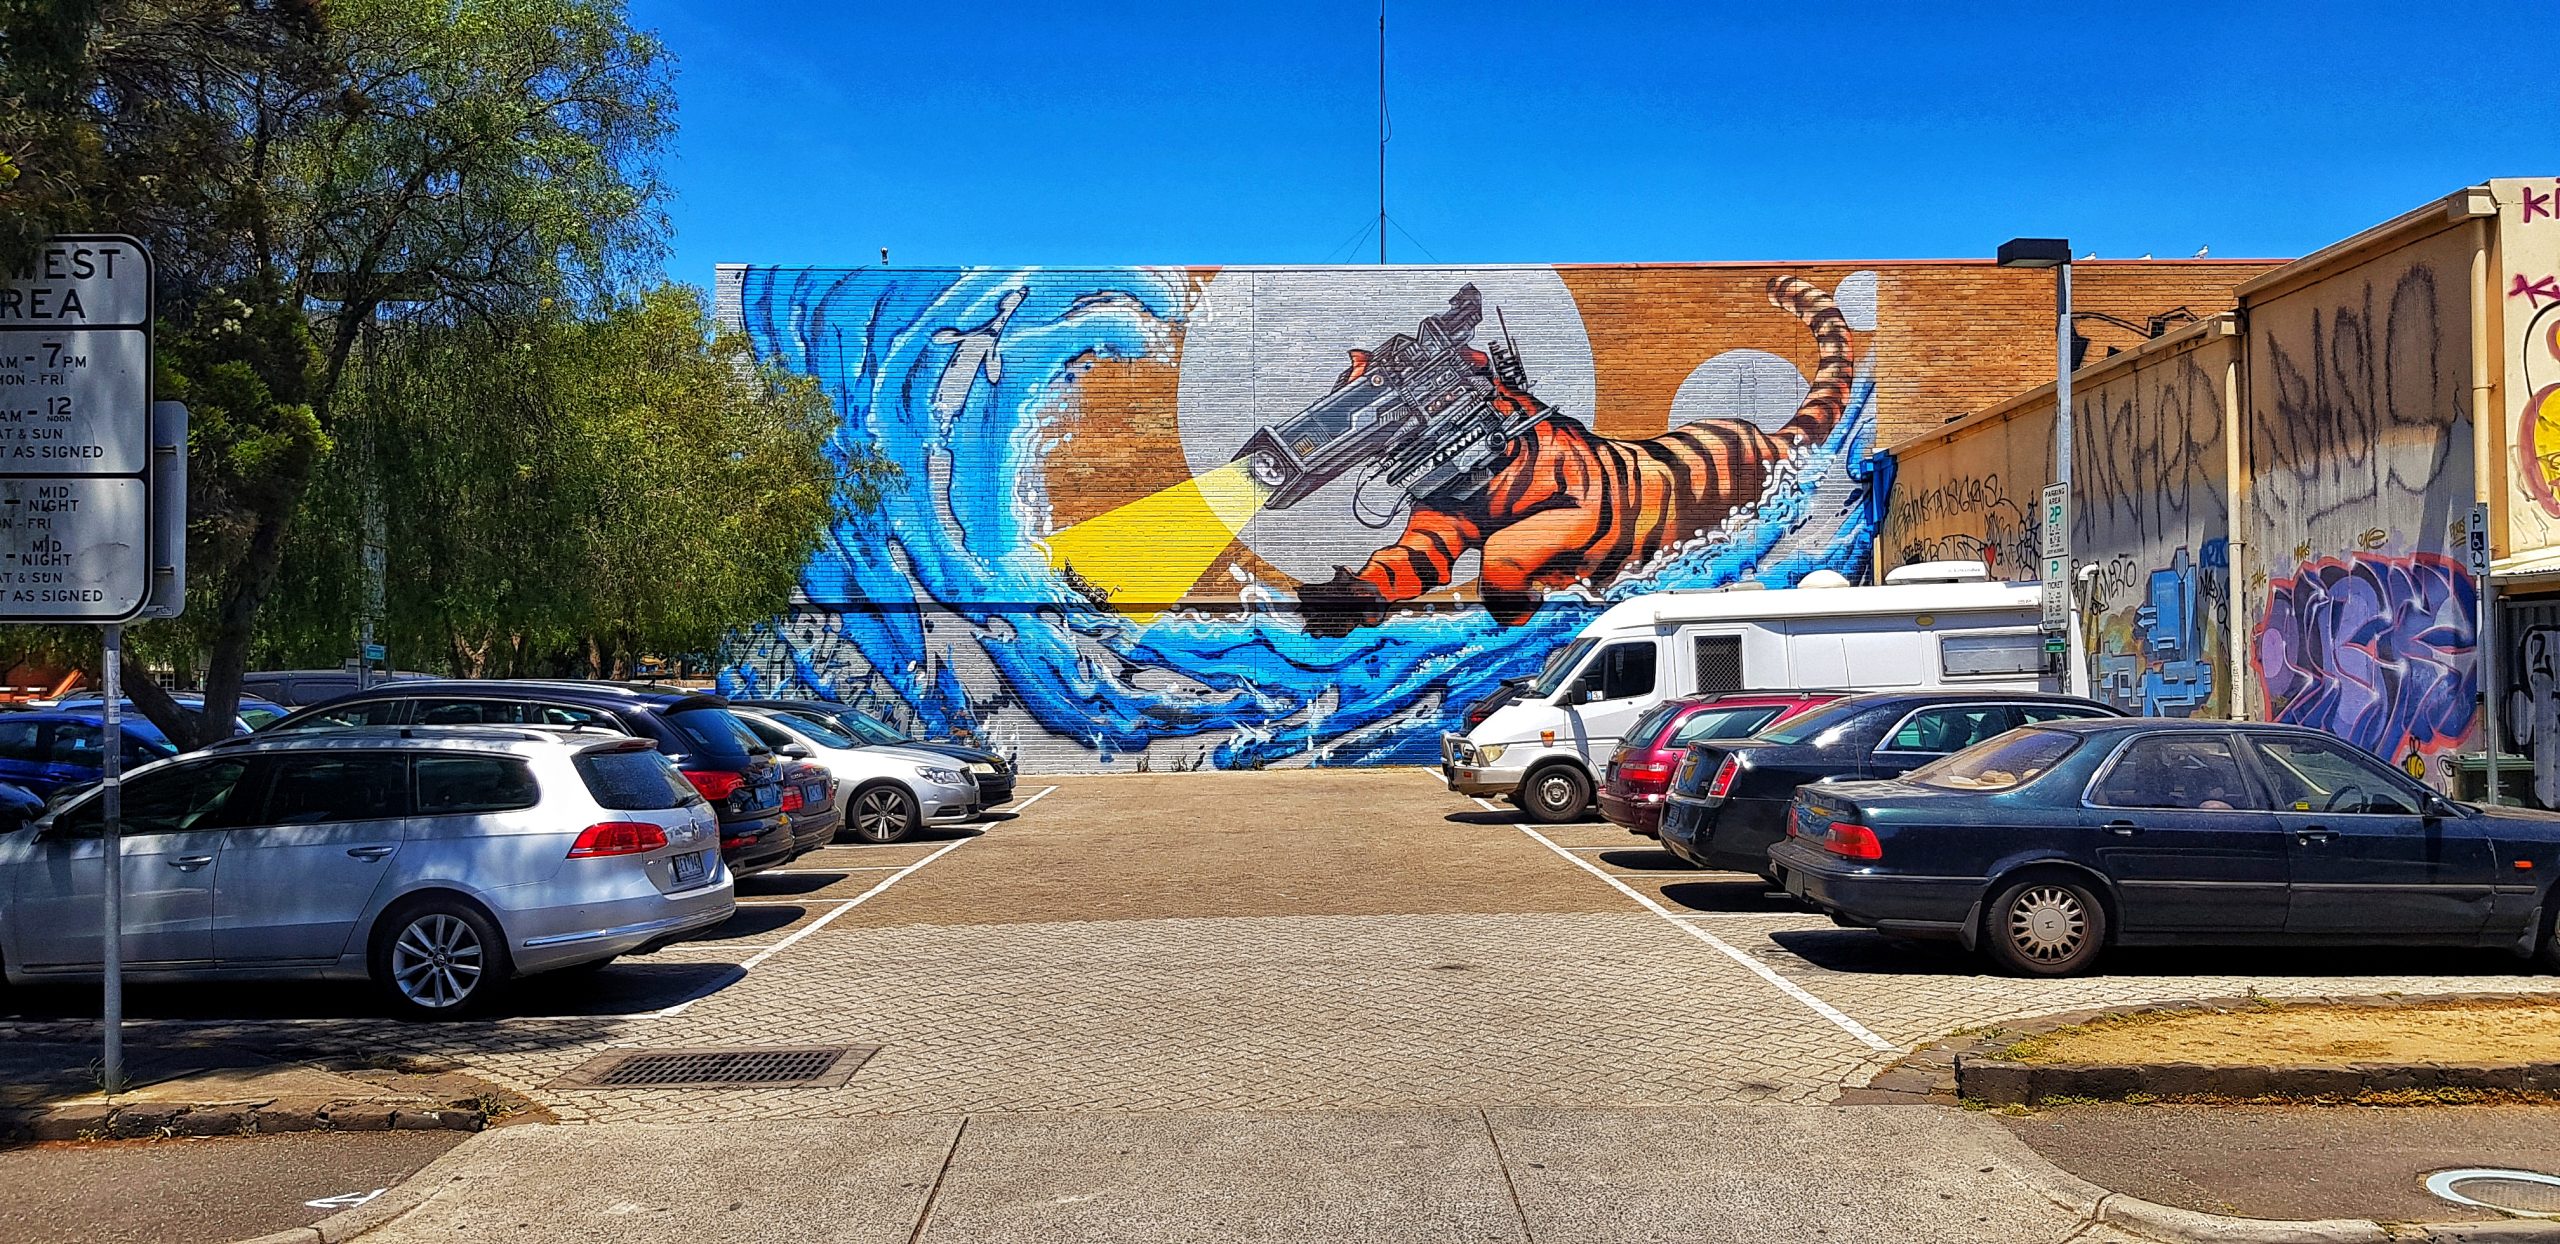 Street art in Melbourne Australia